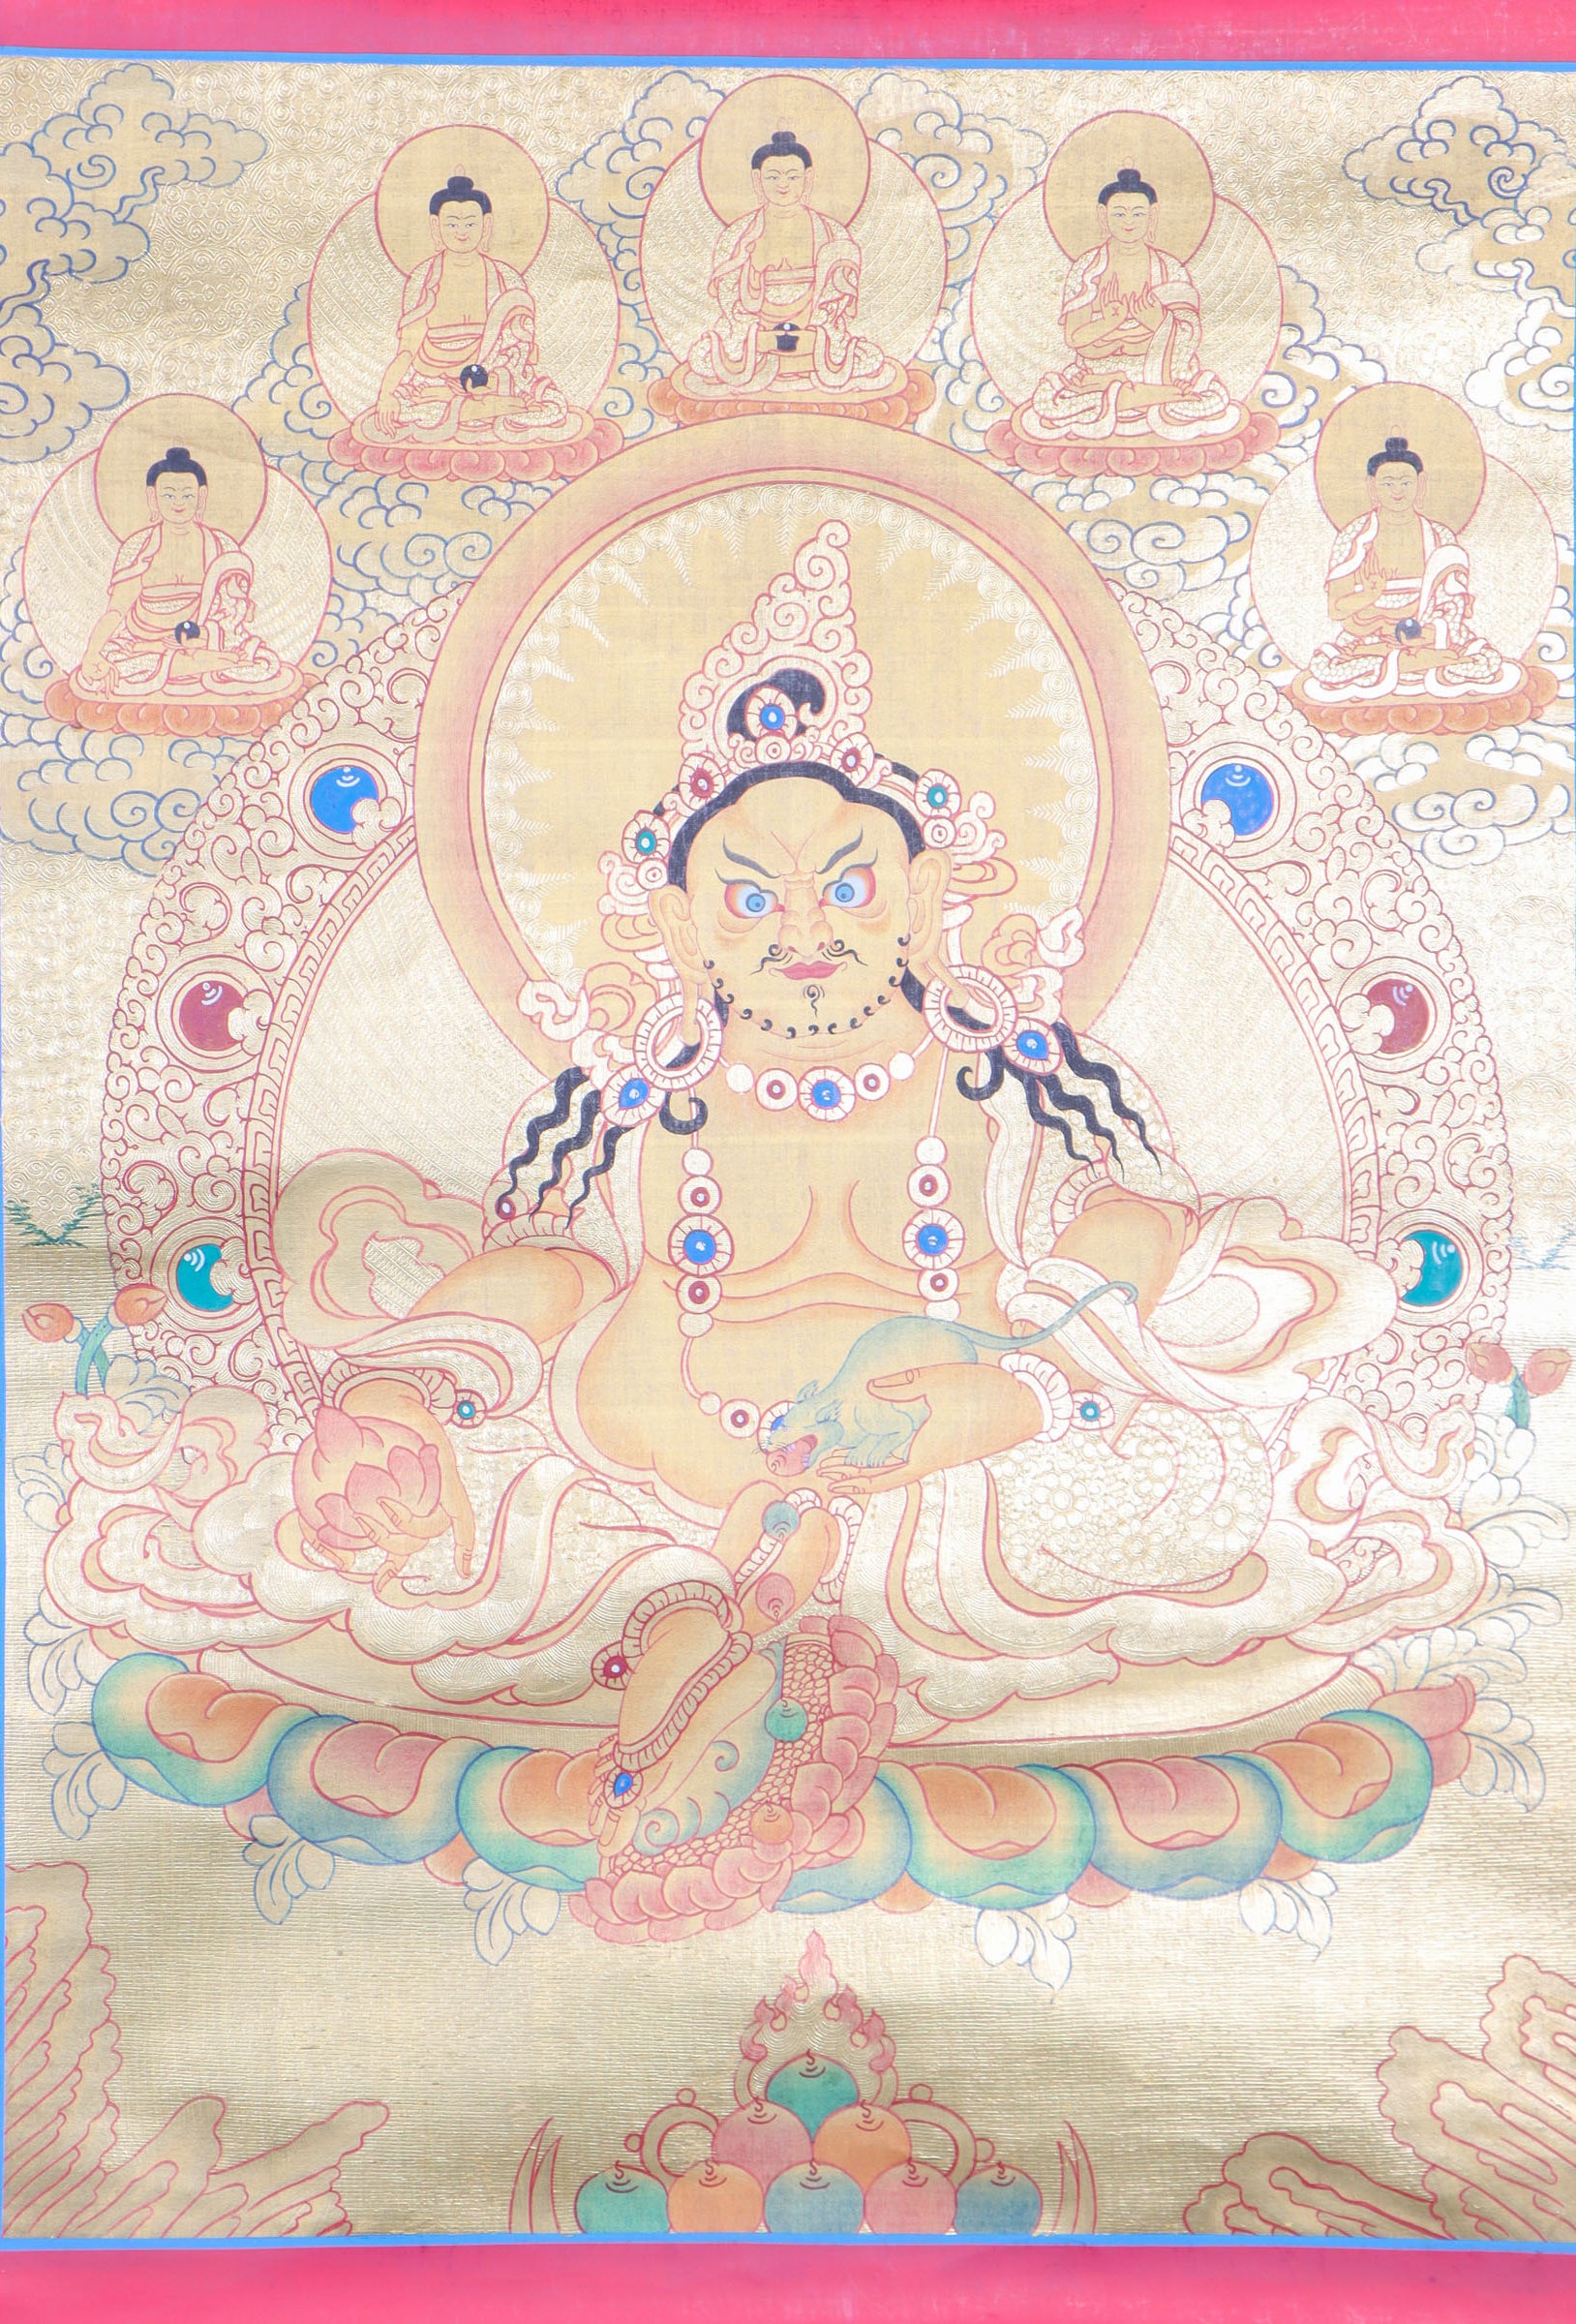 Kuber Thangka Painting for prayer and devotion.